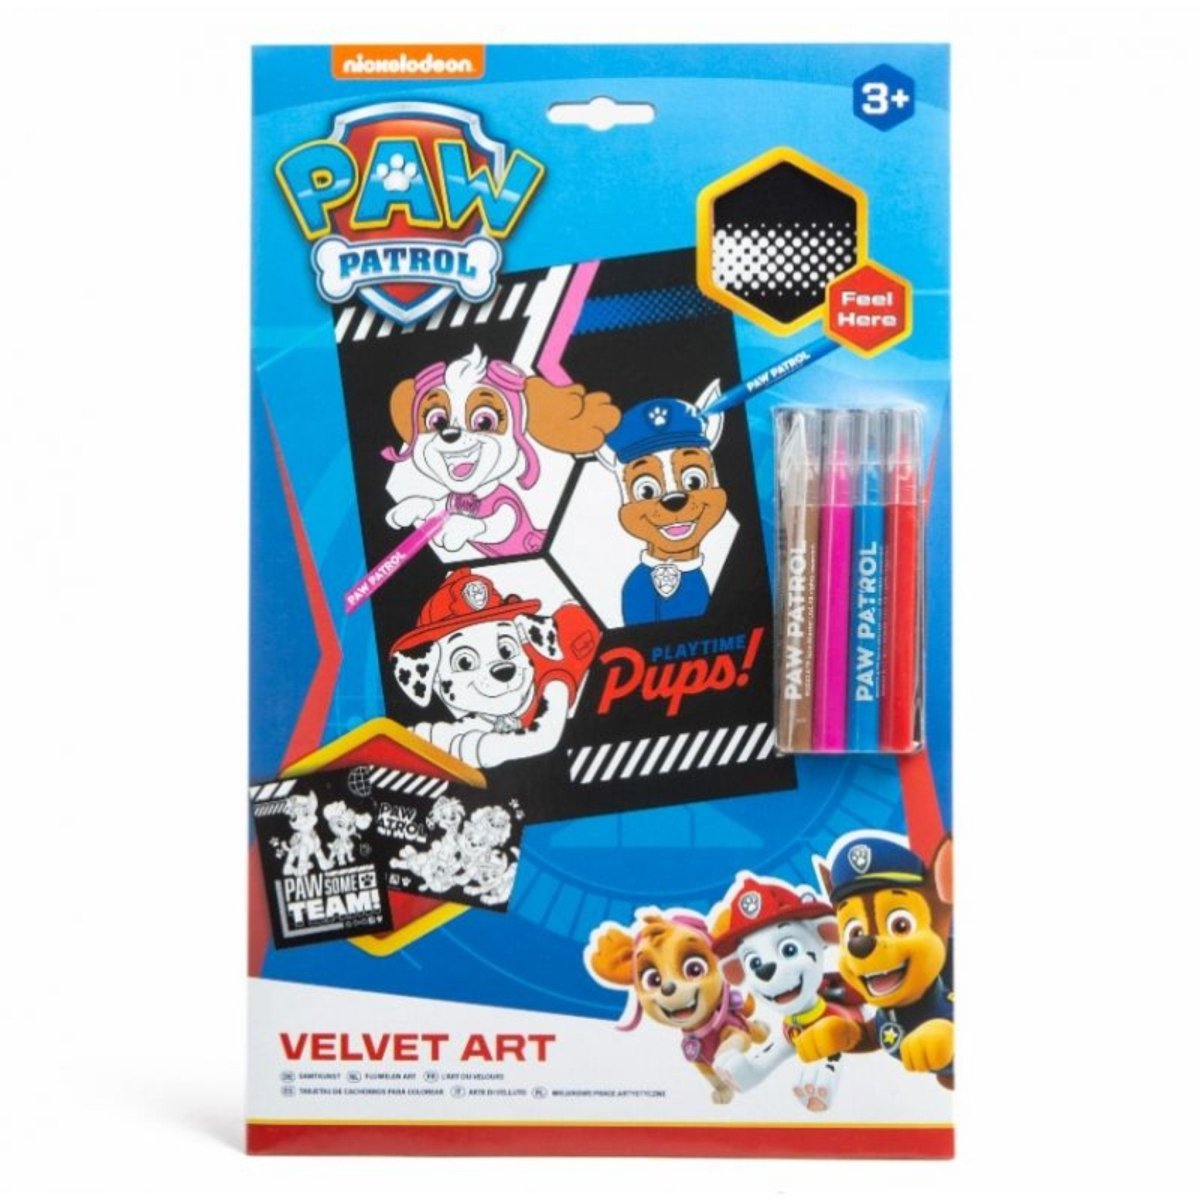 Paw Patrol Velvet Art Set - Kids Party Craft